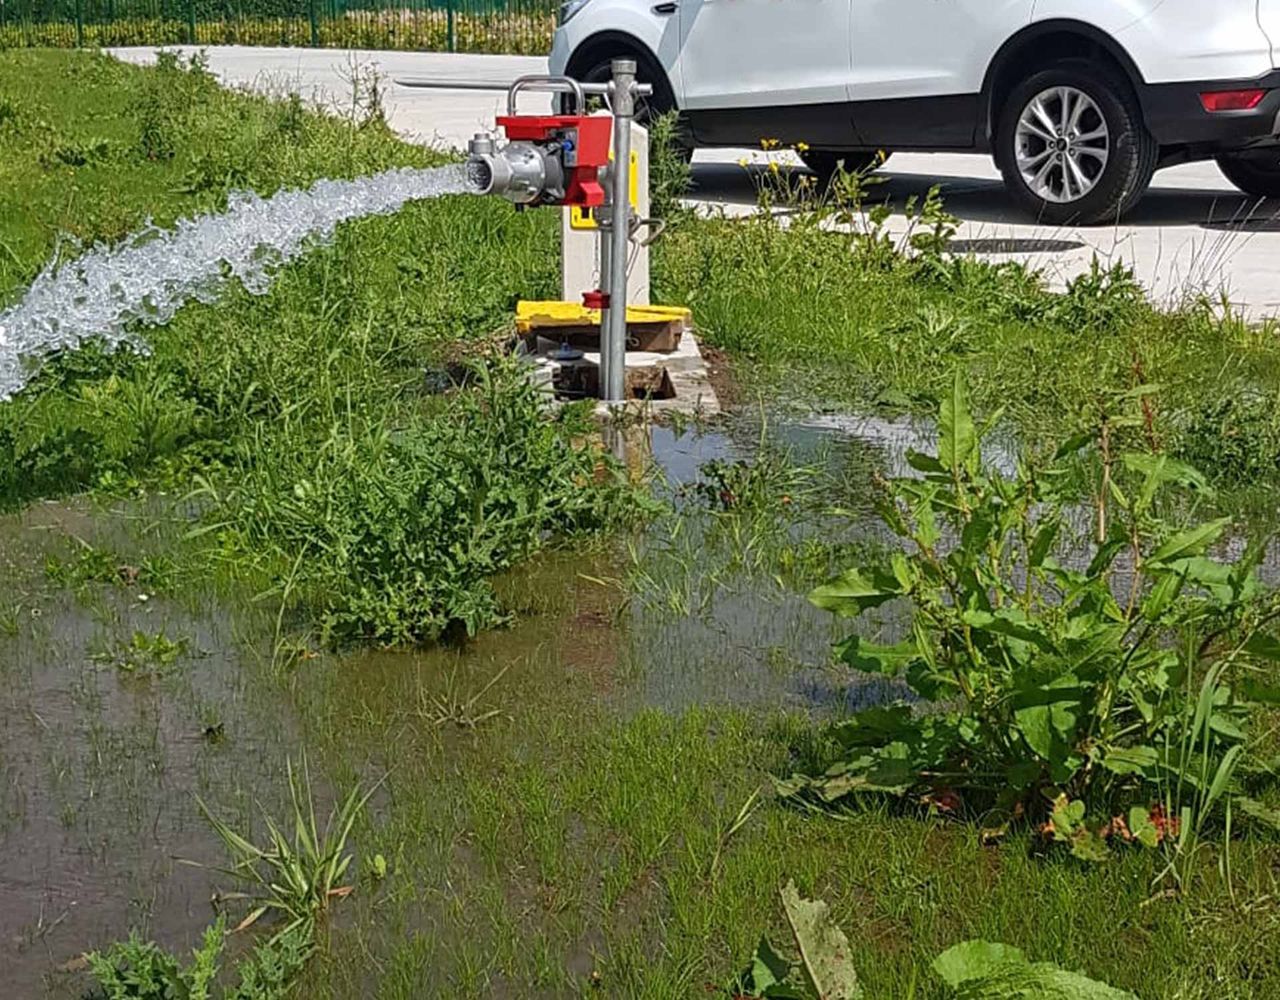 Fire Hydrant testing